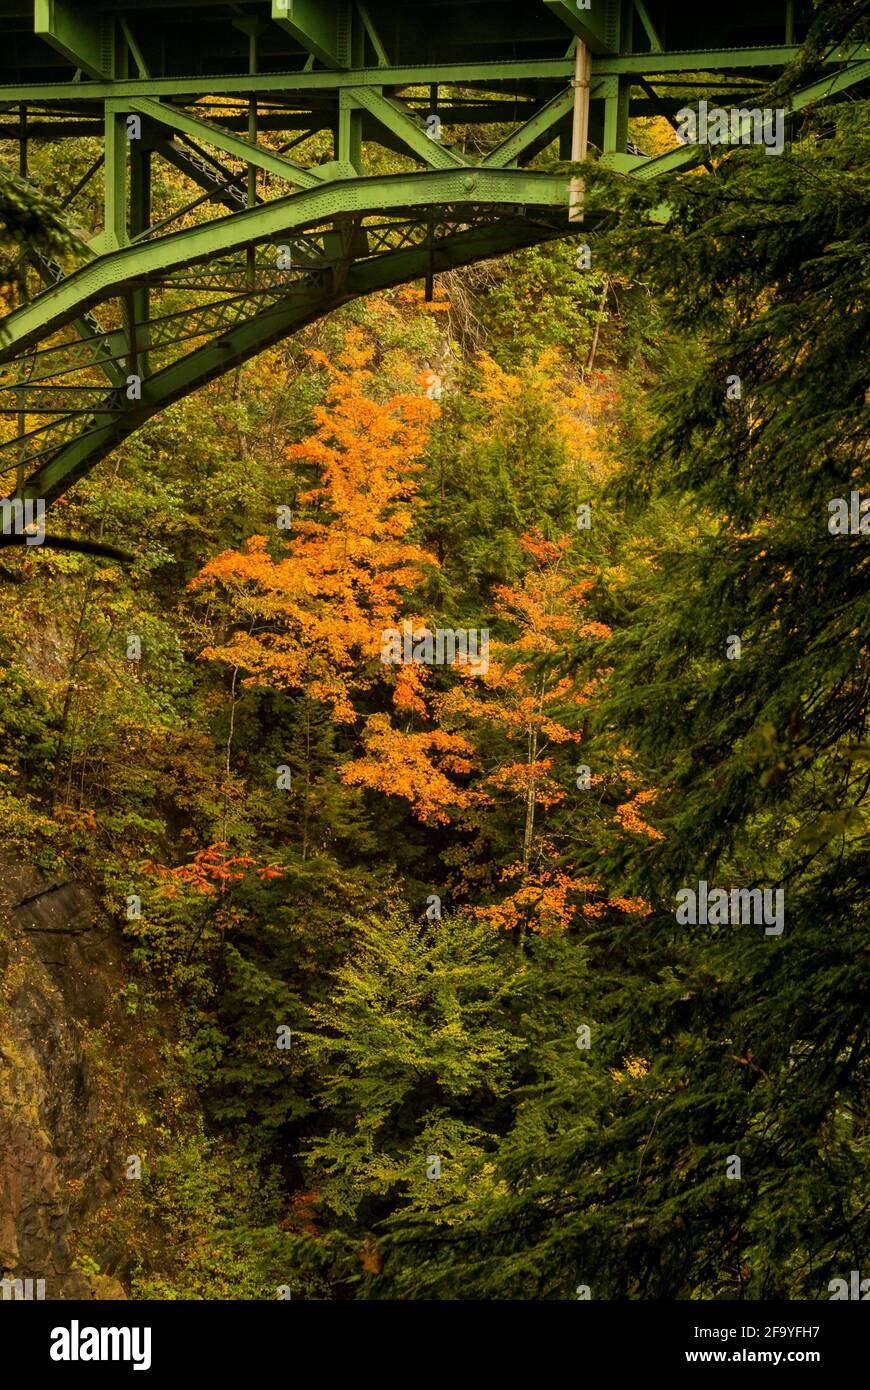 A green iron bridge spanning Quechee Gorge, Vermont, USA in autumn / fall. Stock Photo